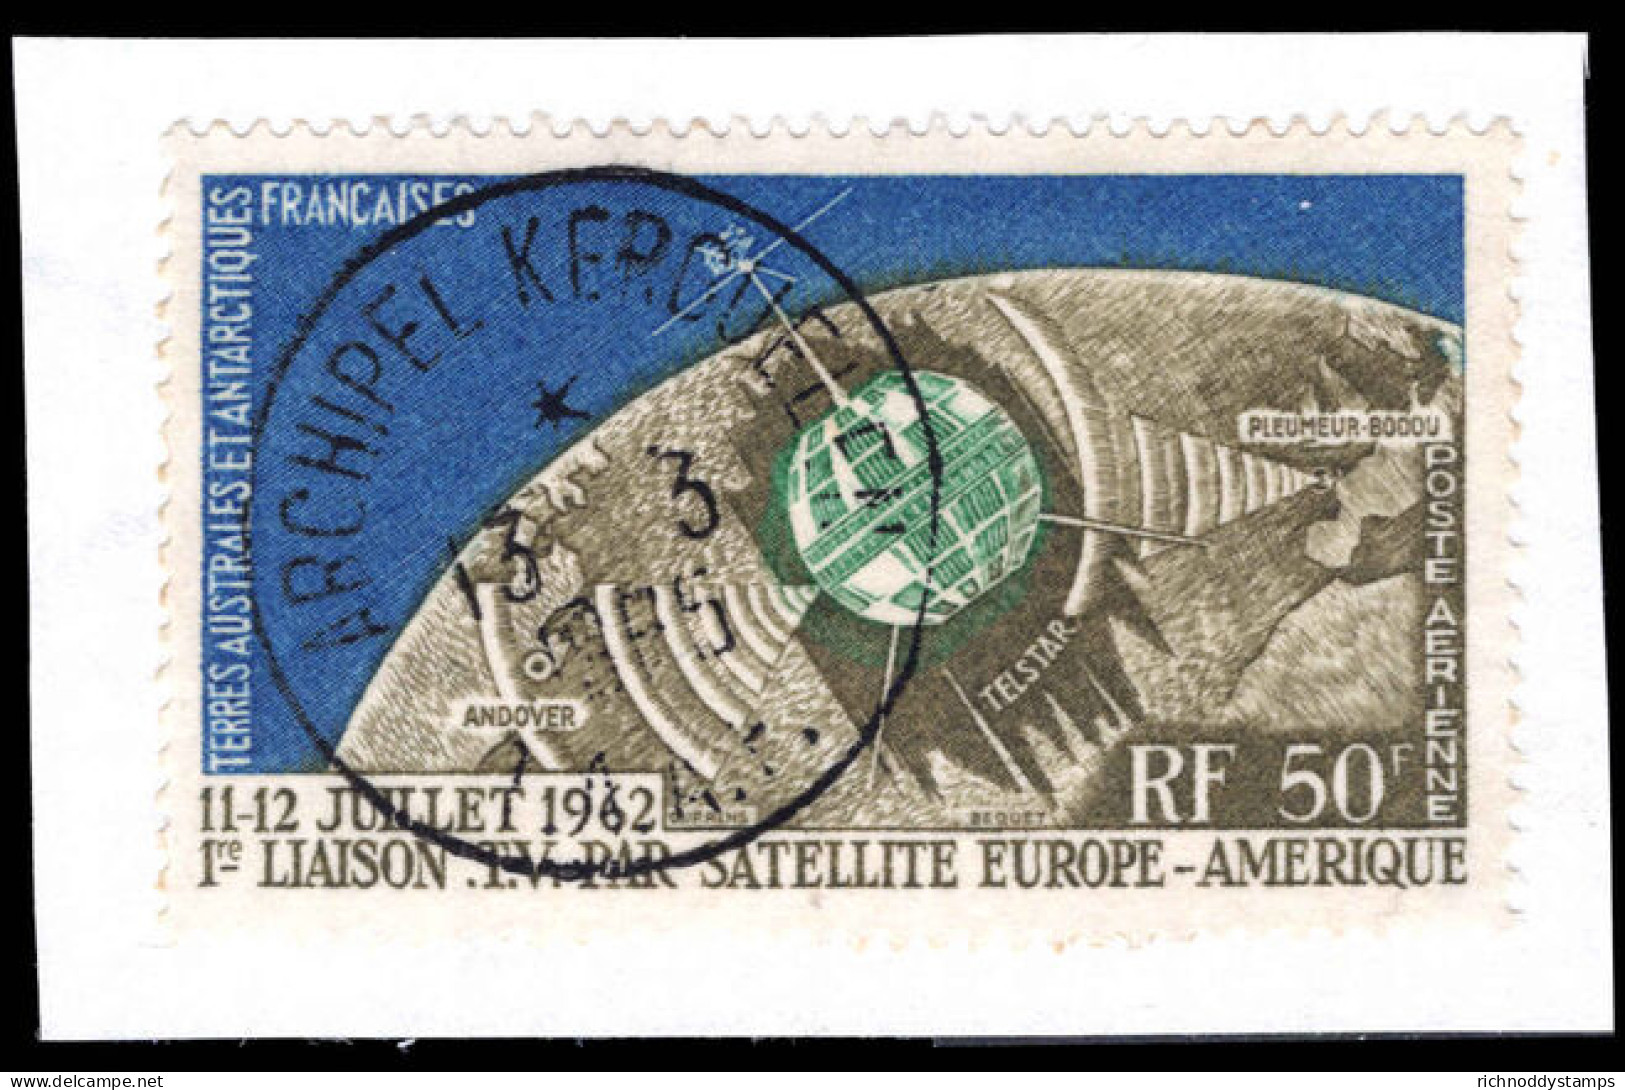 FSAT 1962 Telstar Fine Used. - Used Stamps